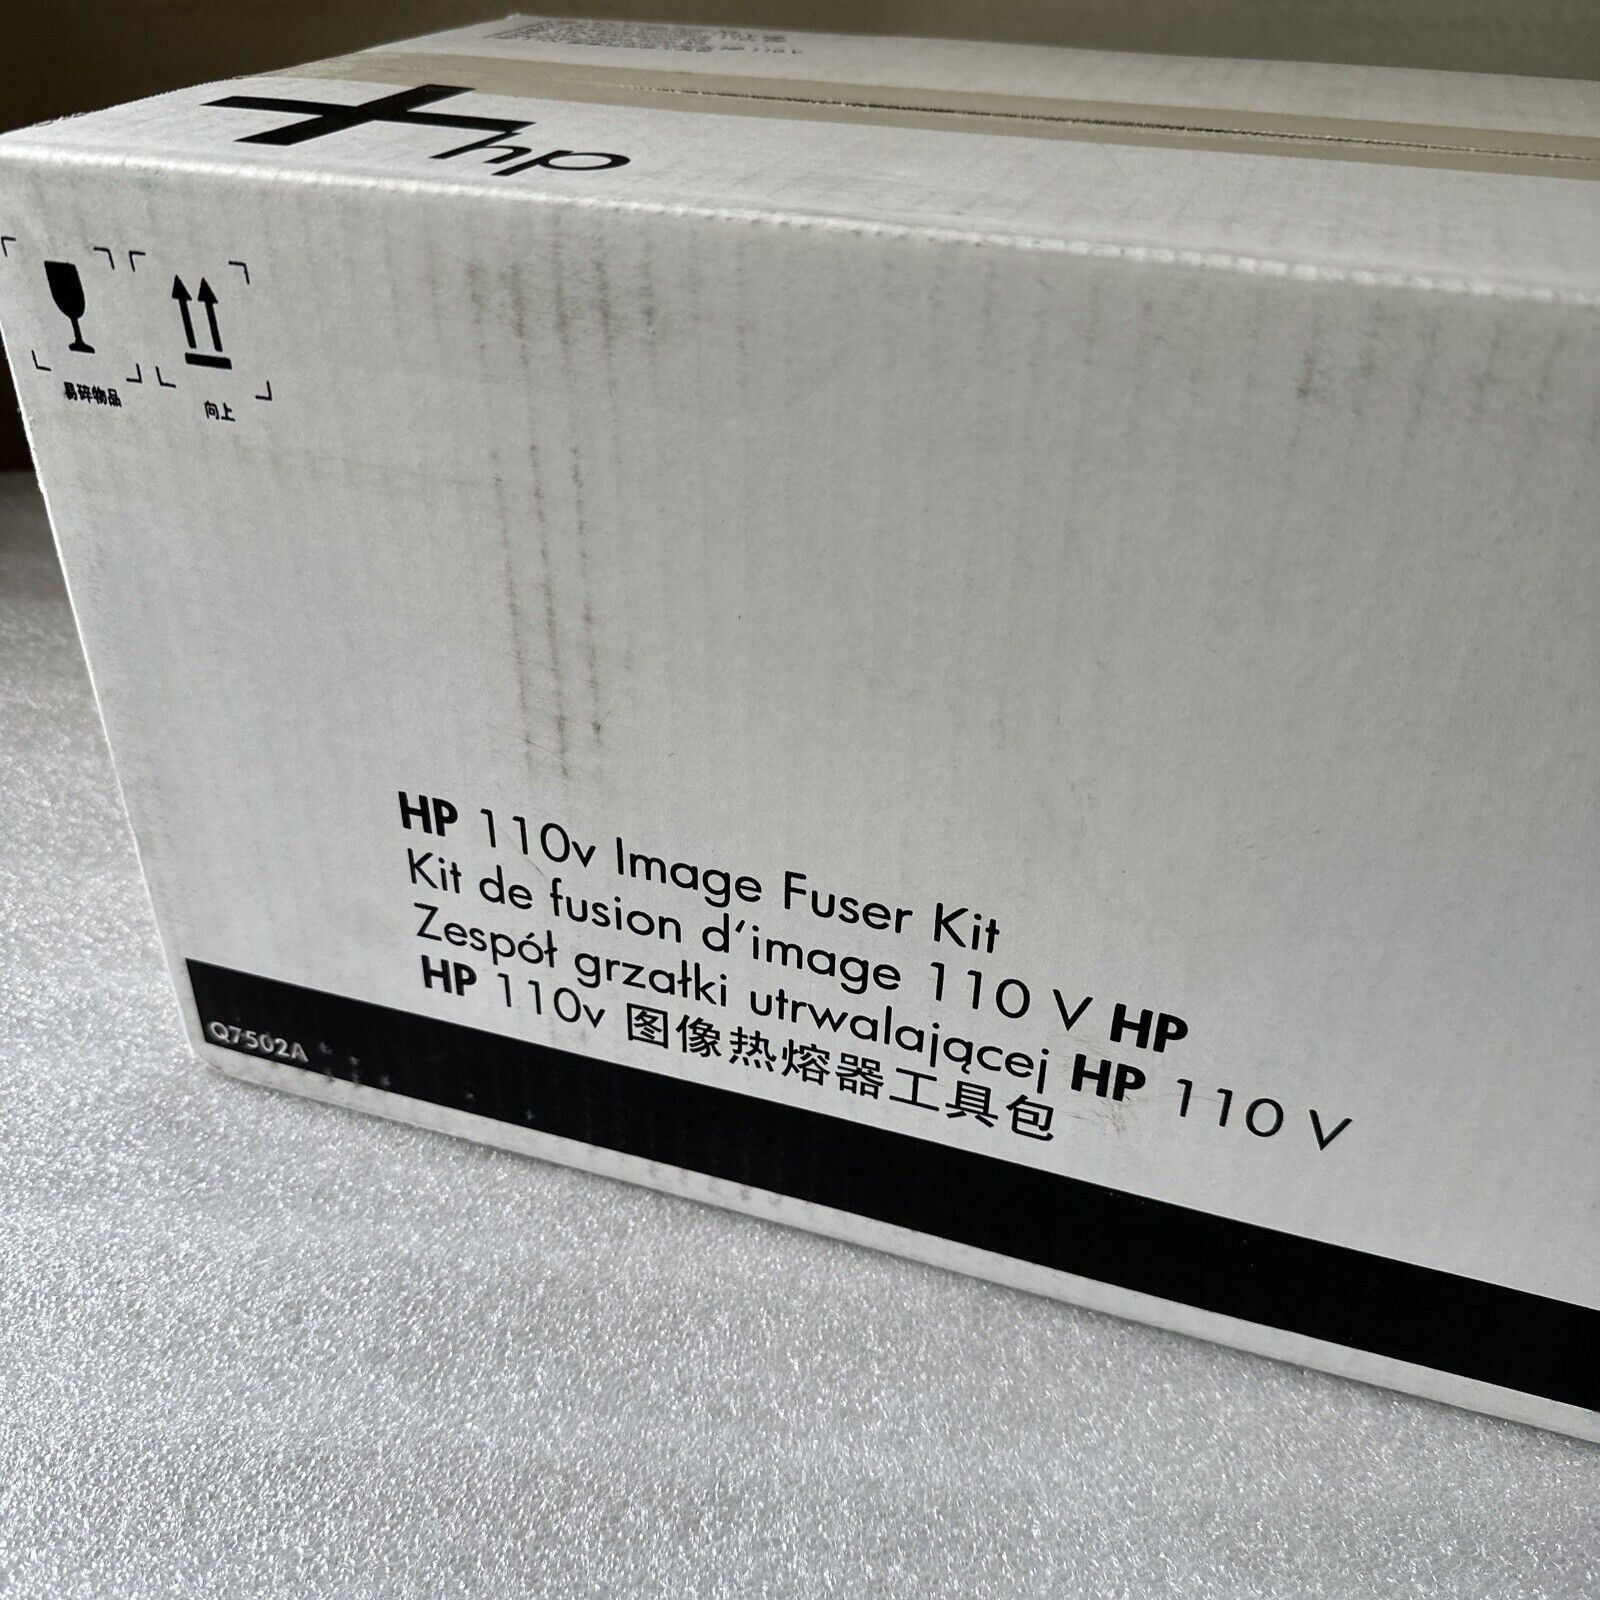 Genuine HP Q7502A RM1-3131 Fuser Assembly for Laserjet 4700 Series Printer